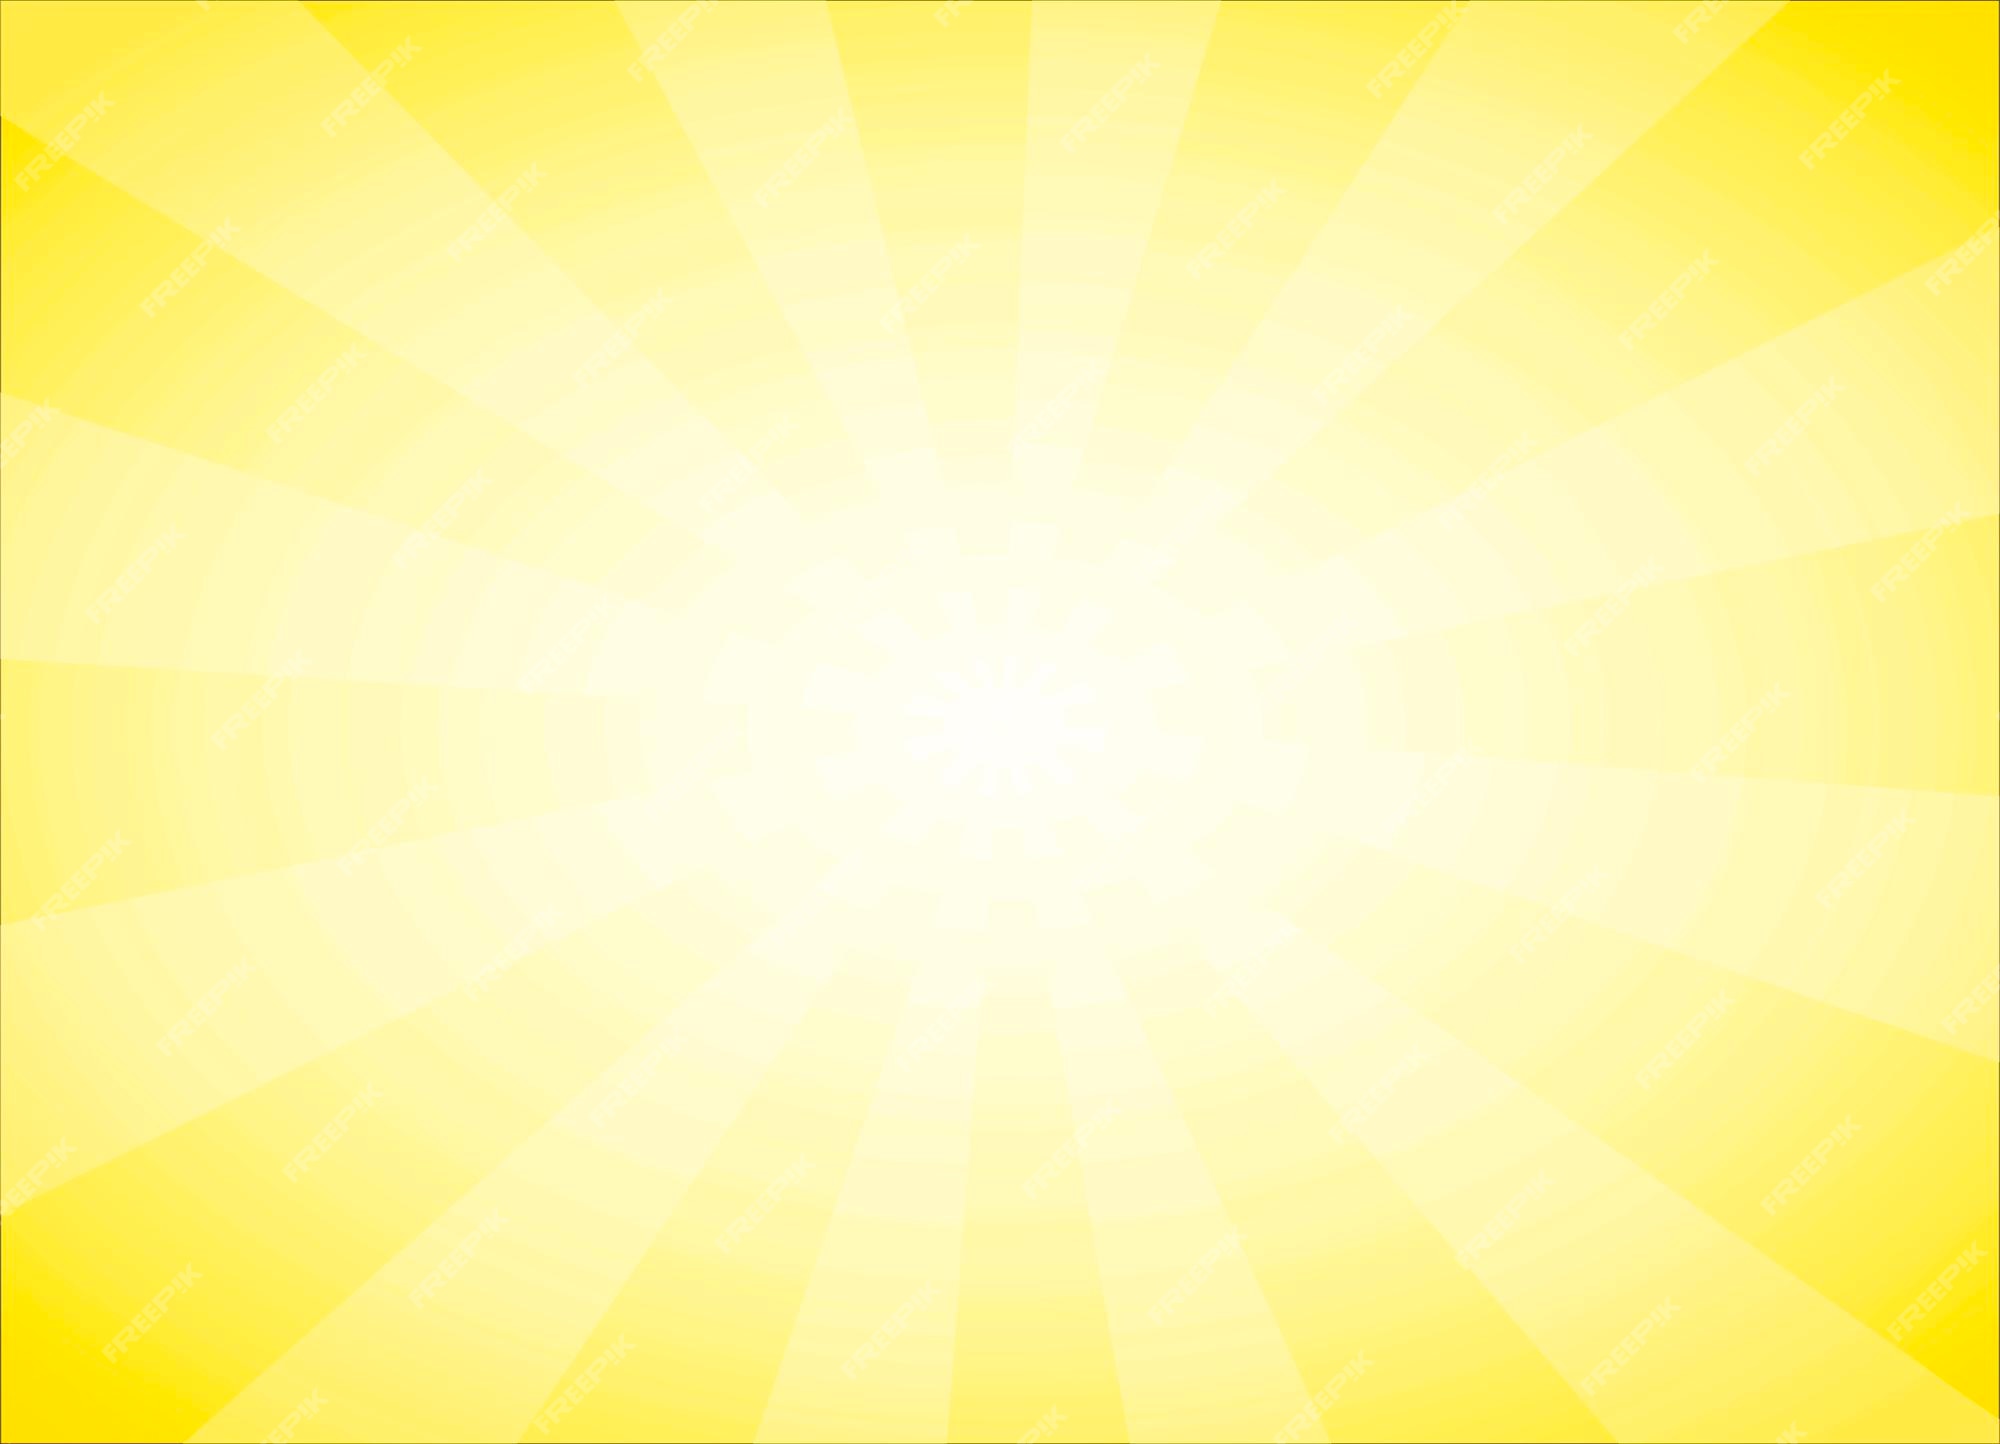 Light Yellow Background Images - Free Download on Freepik